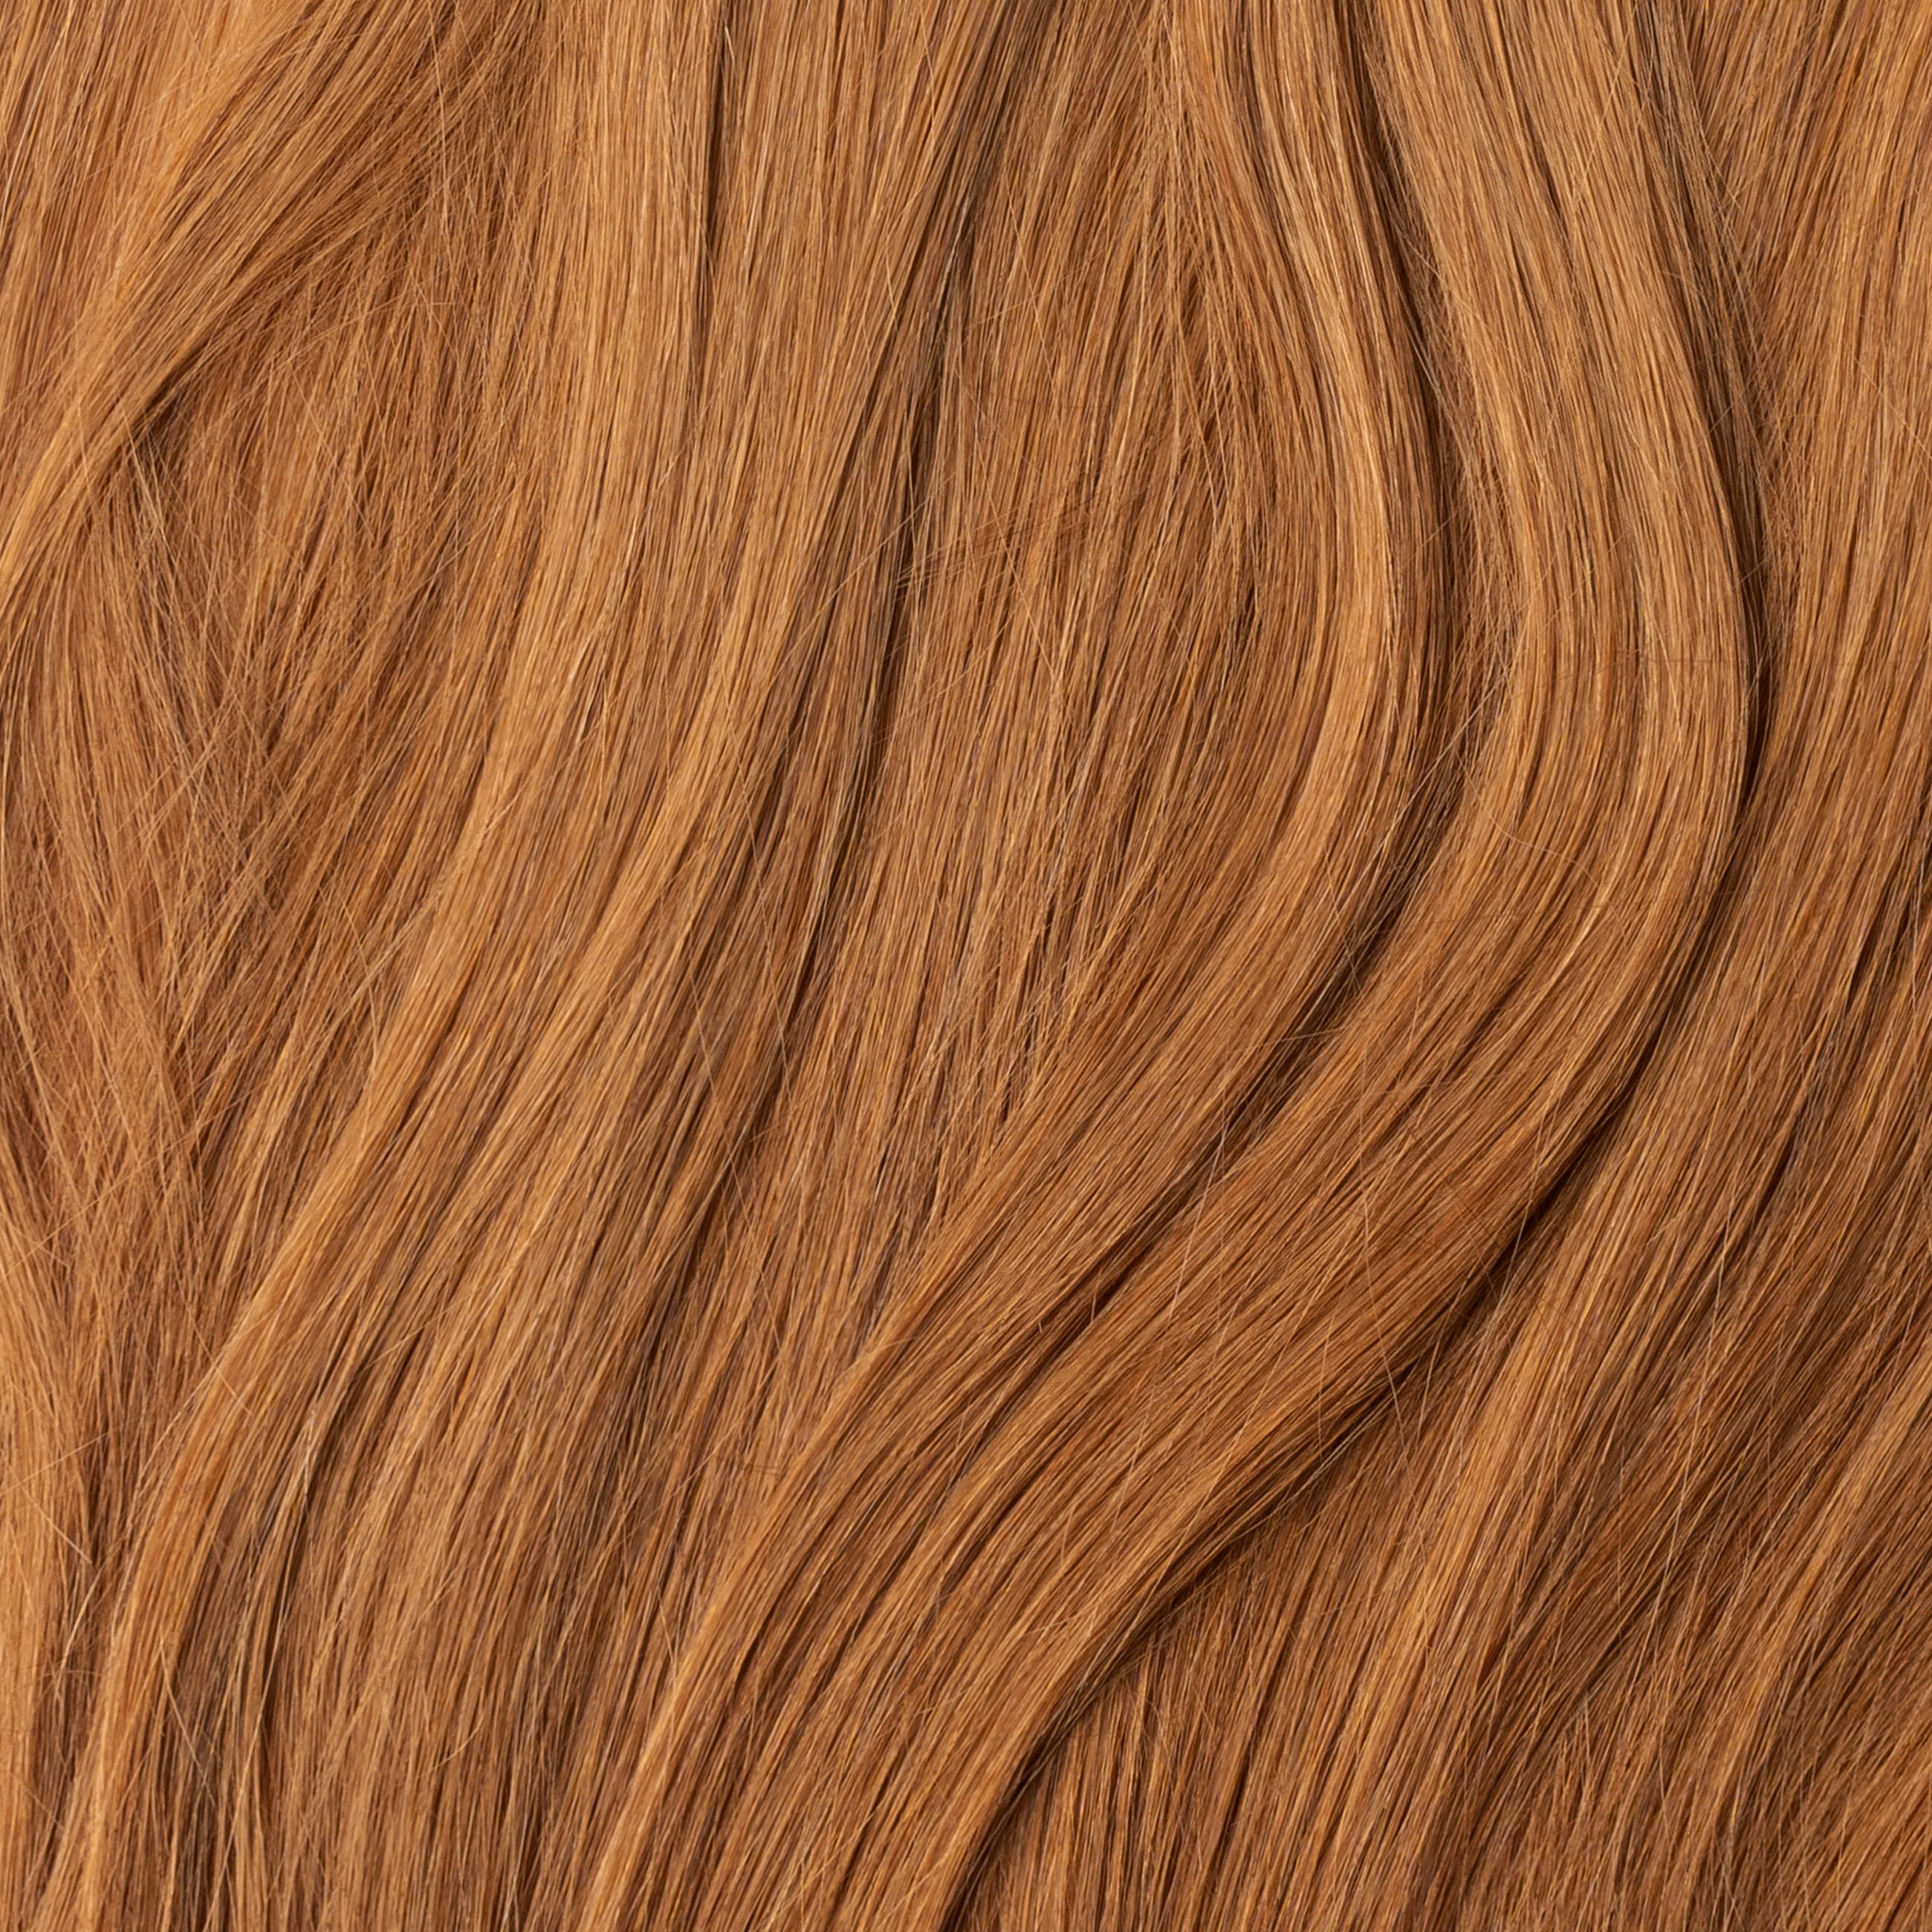 Halo hair extensions - Lys rødbrun nr. 7